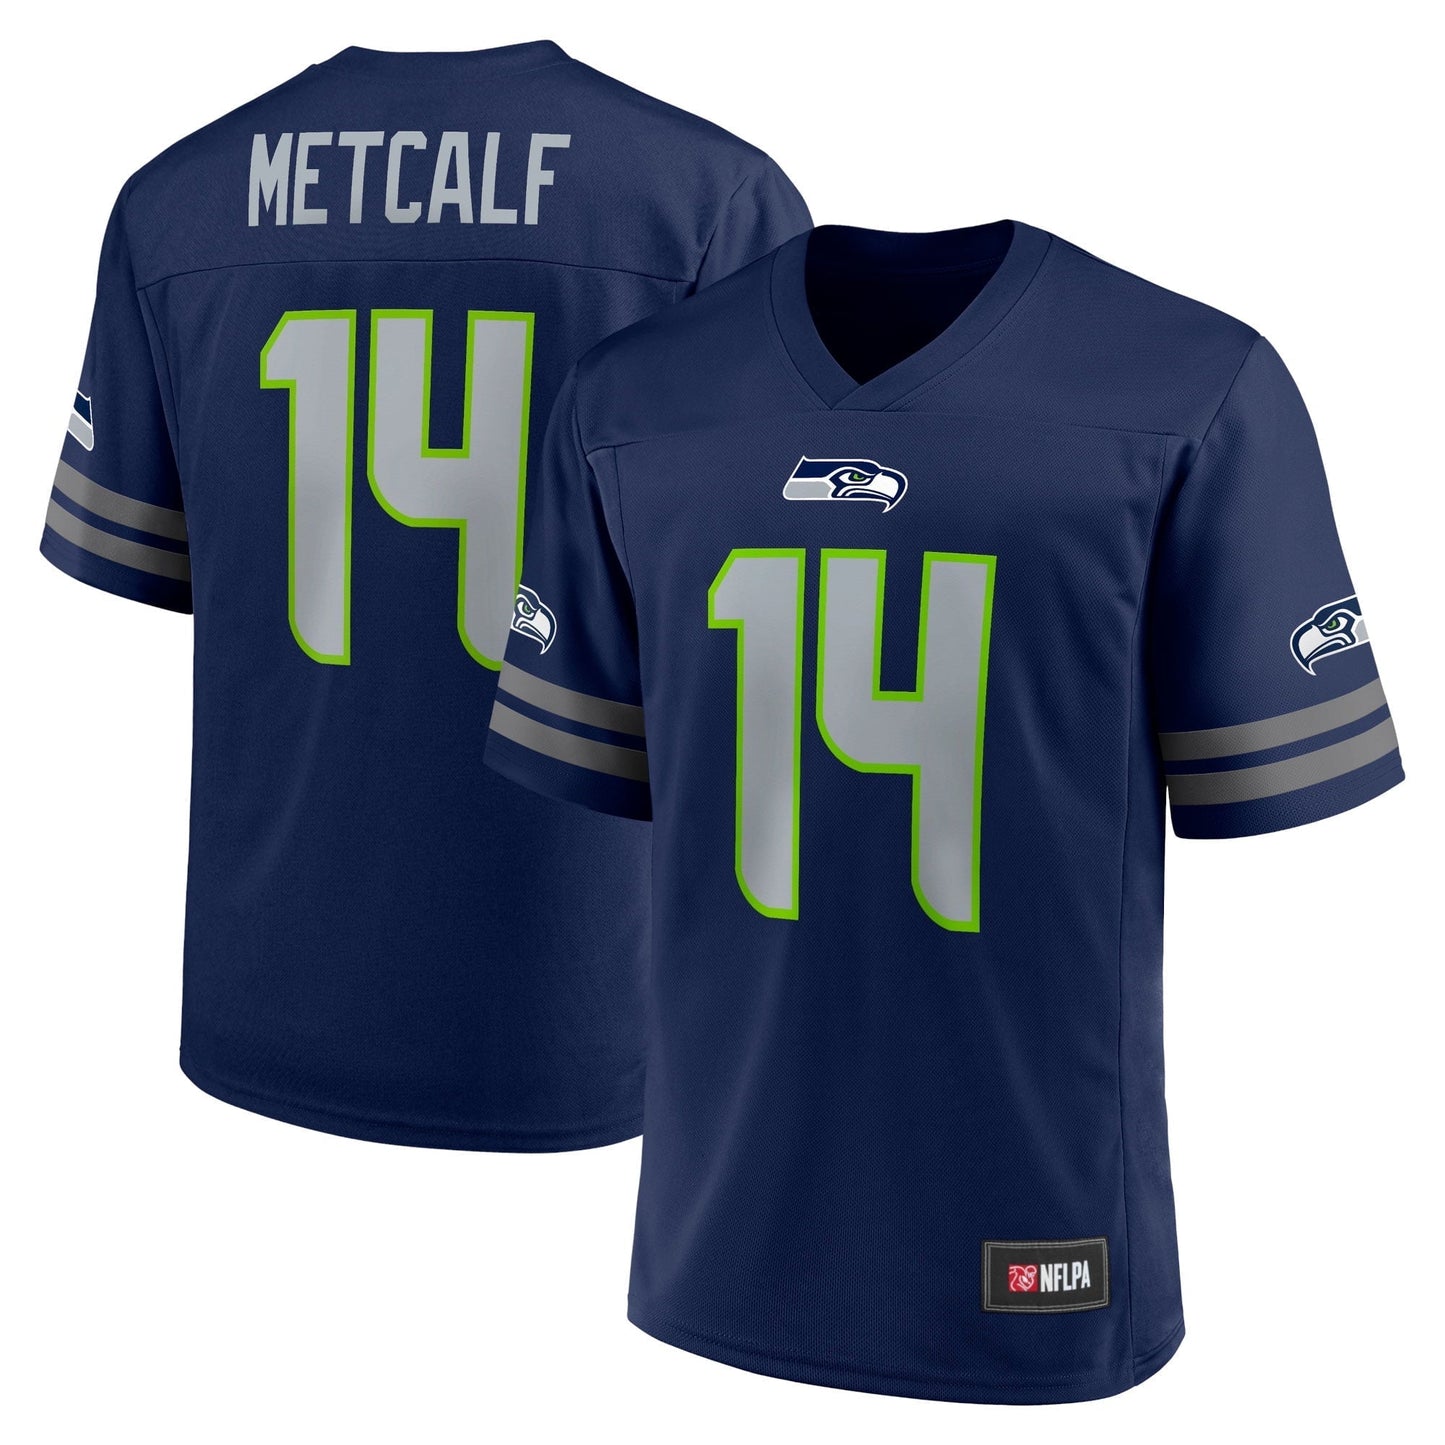 Men's Fanatics Branded DK Metcalf College Navy Seattle Seahawks Replica Player Jersey